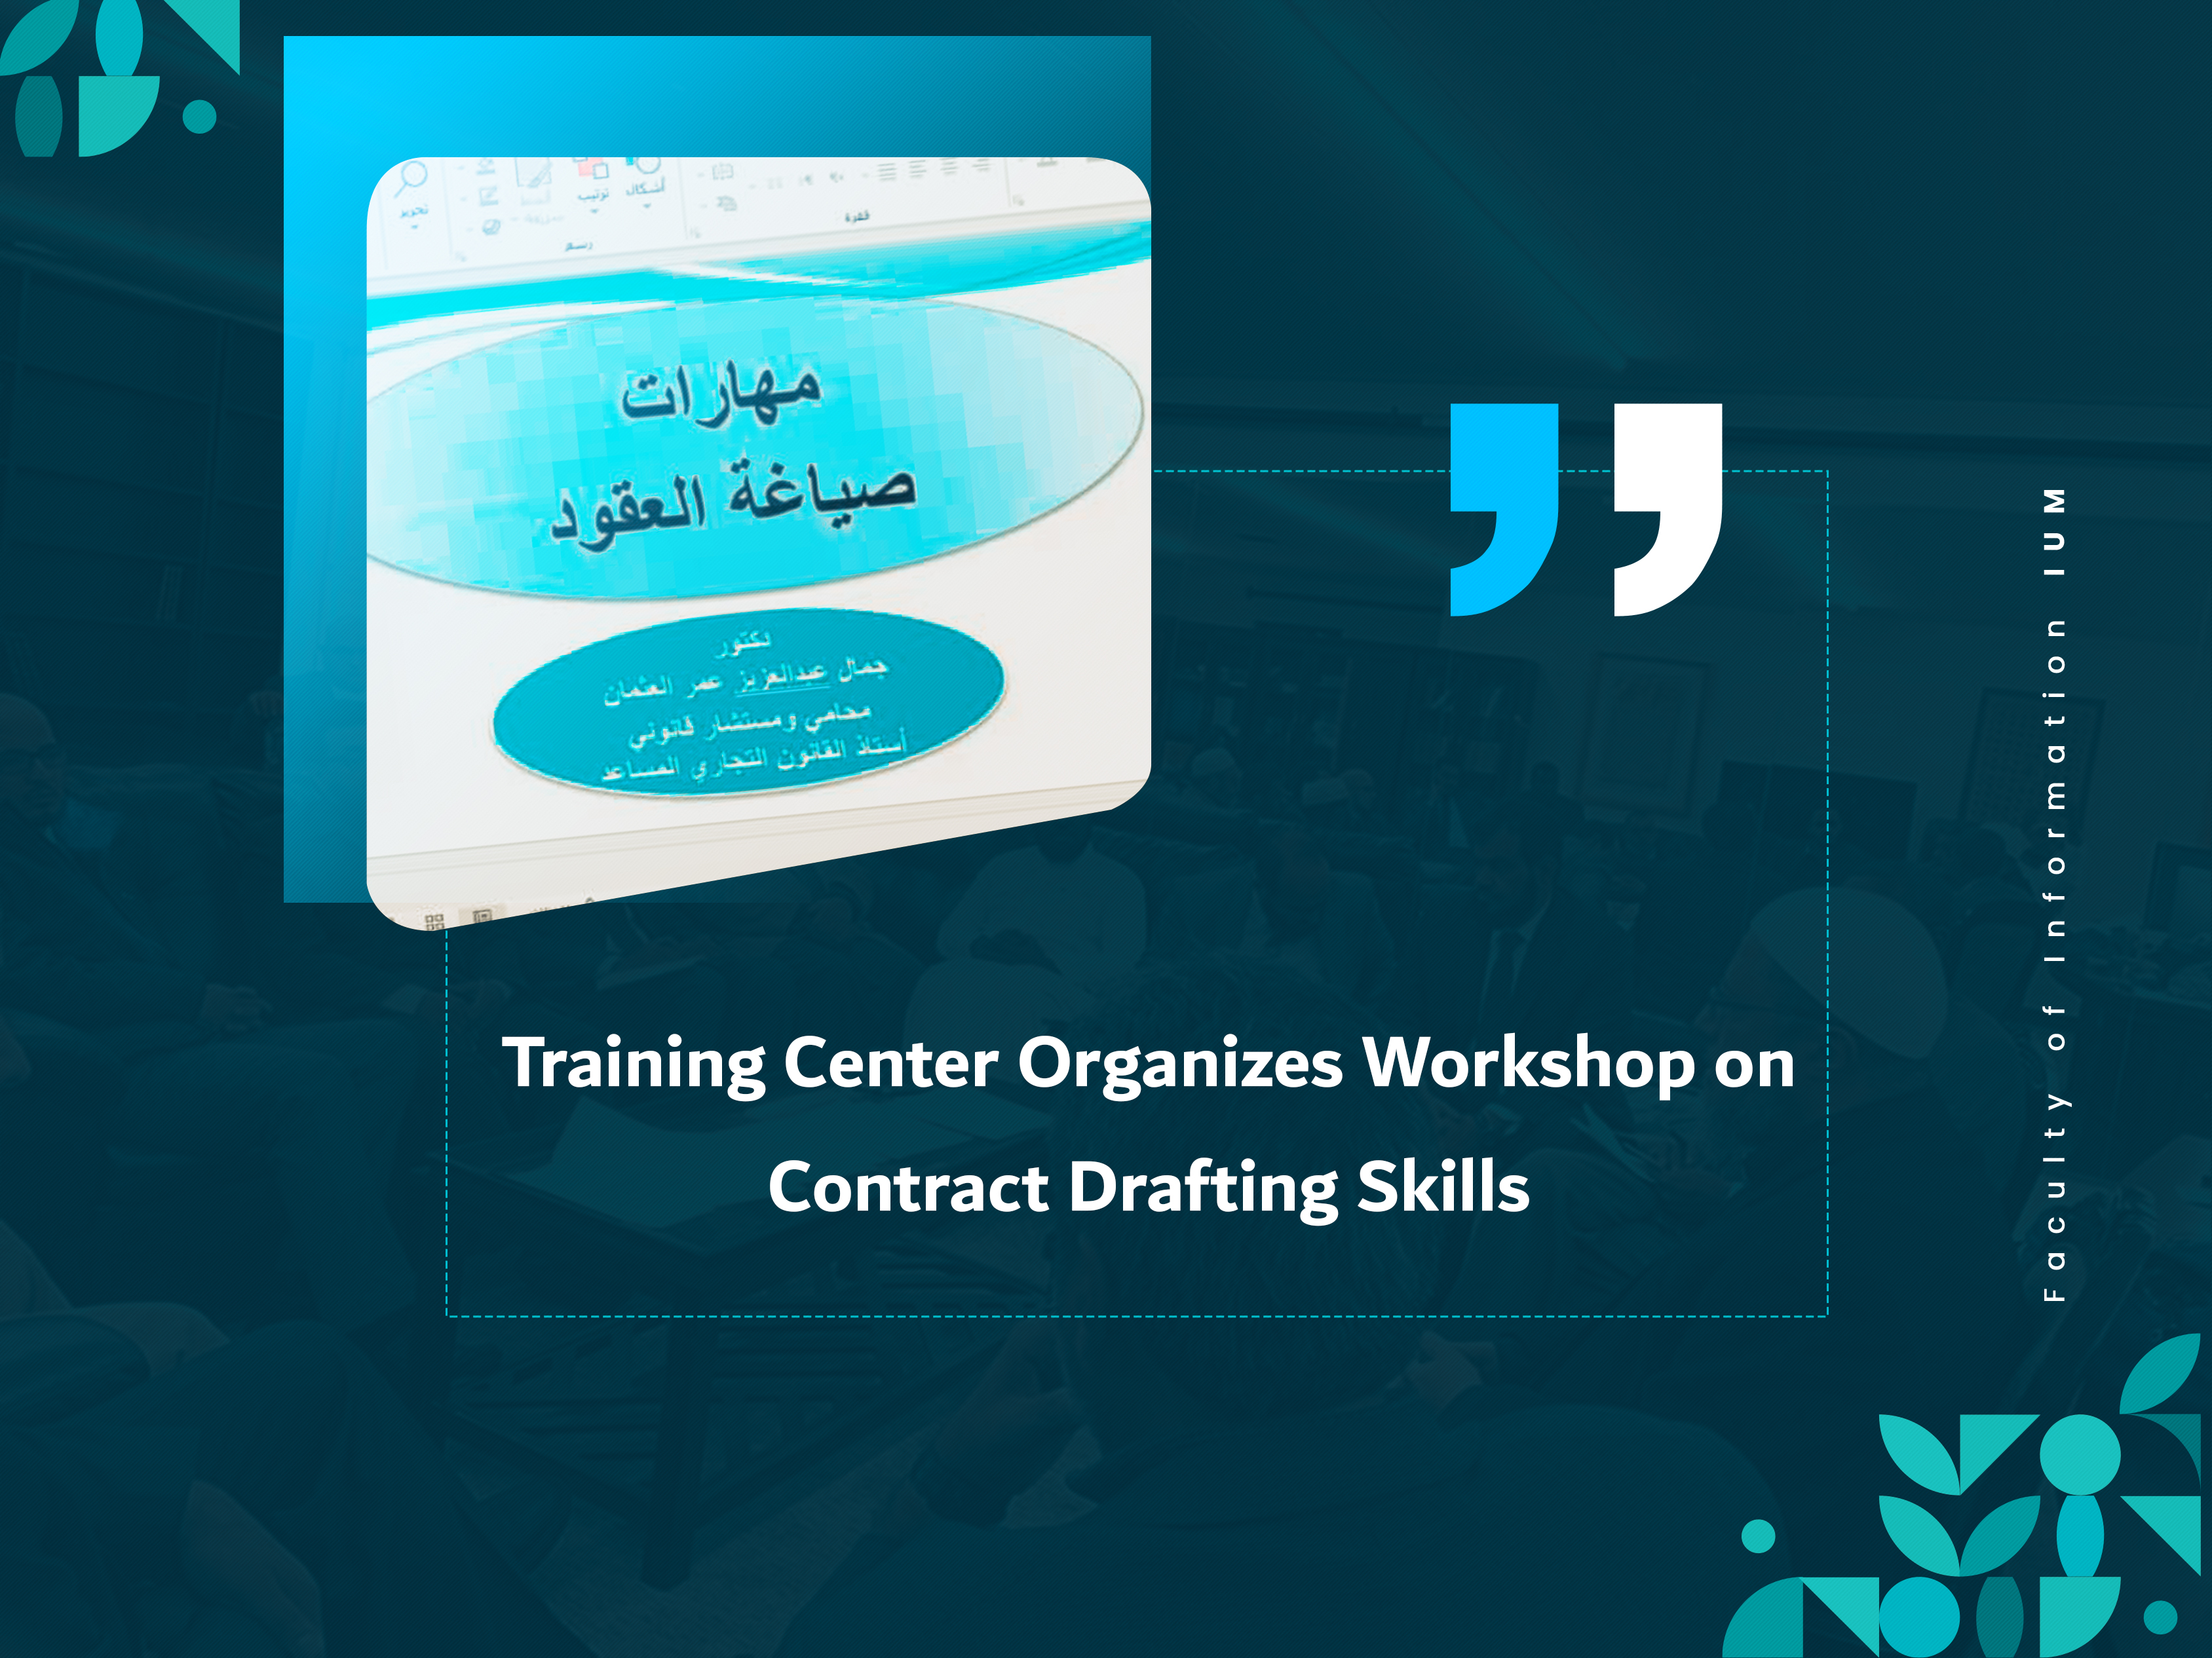 Training Center Organizes Workshop on Contract Drafting Skills